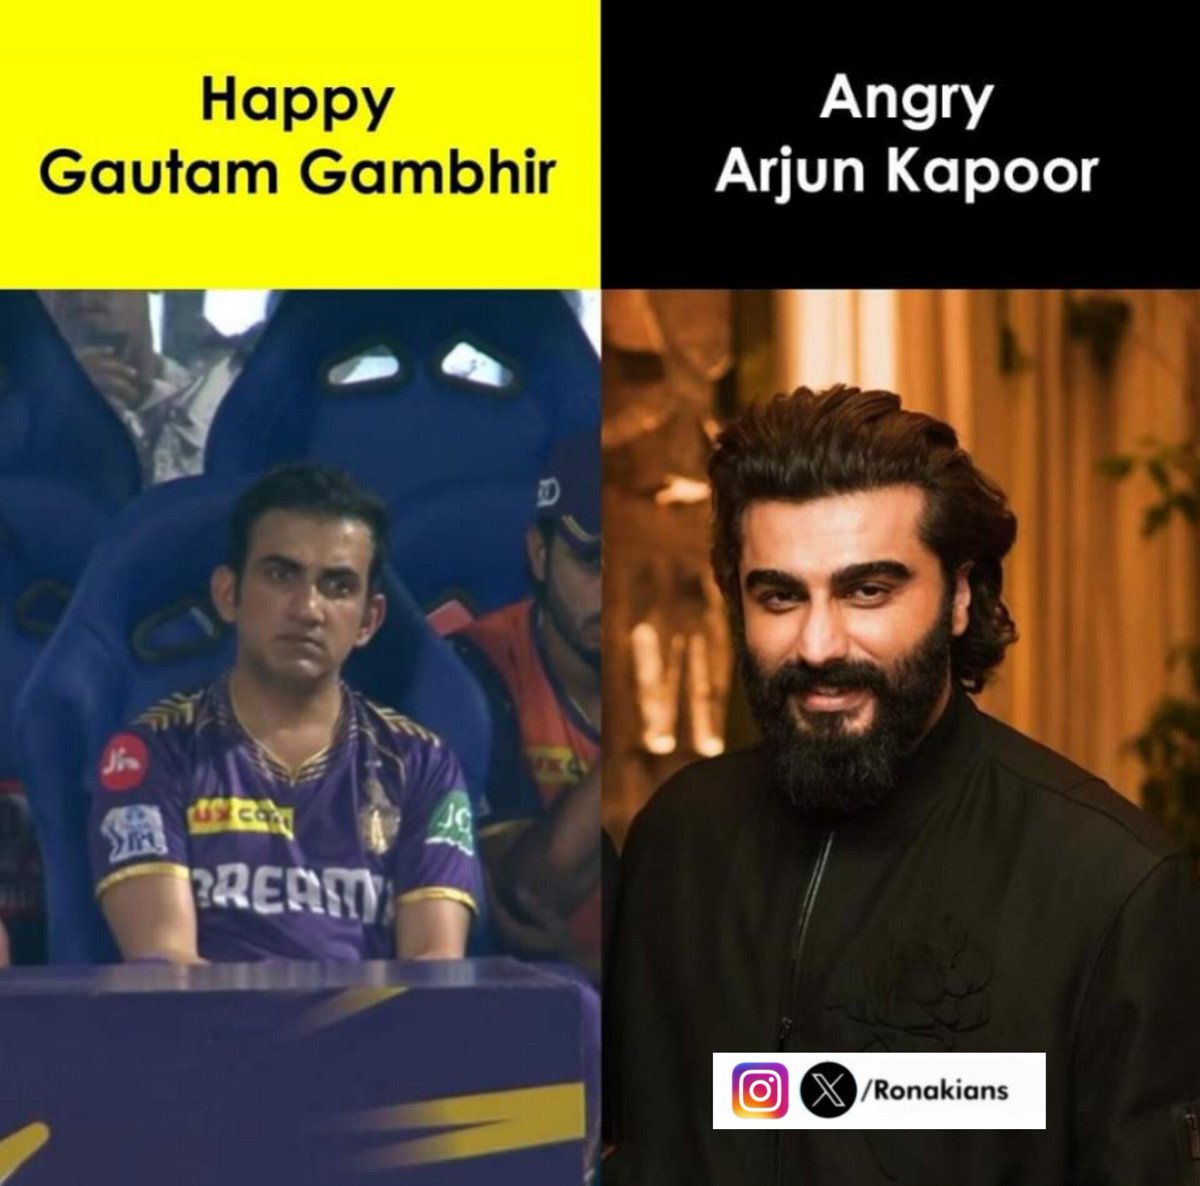 Their Expression 🔥

#GautamGambhir #ArjunKapoor